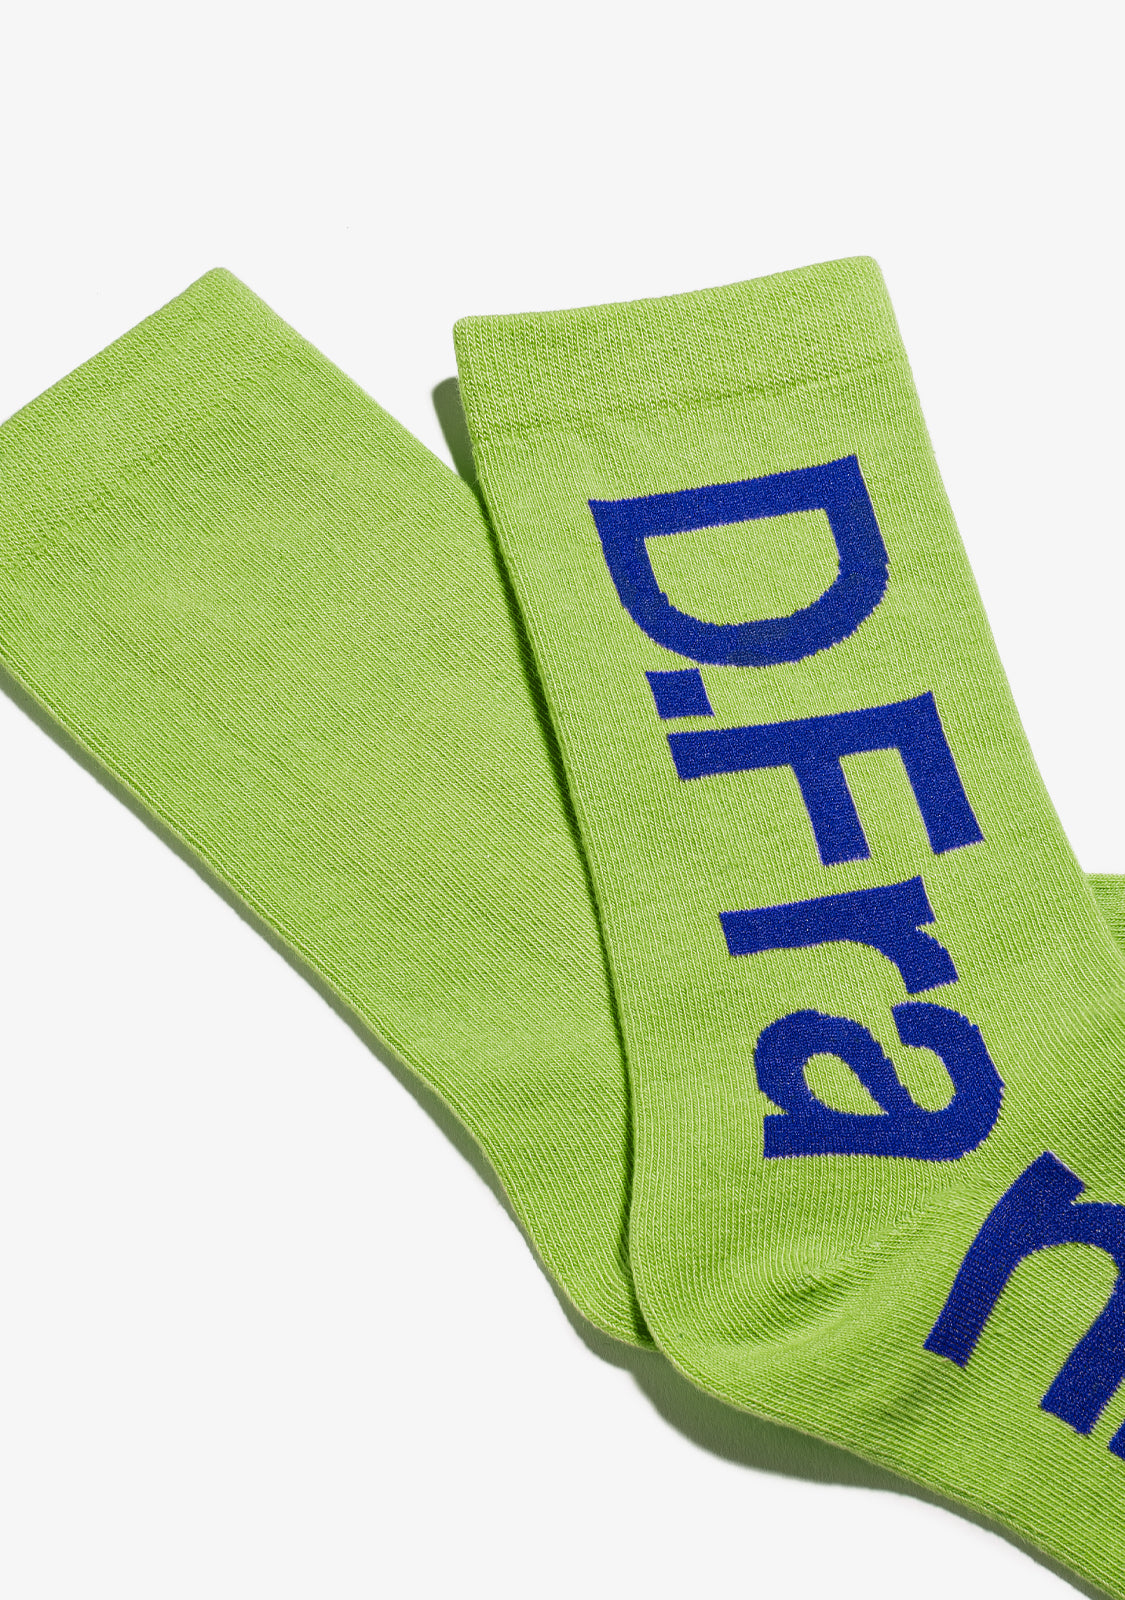 DF Socks Lime / Blue